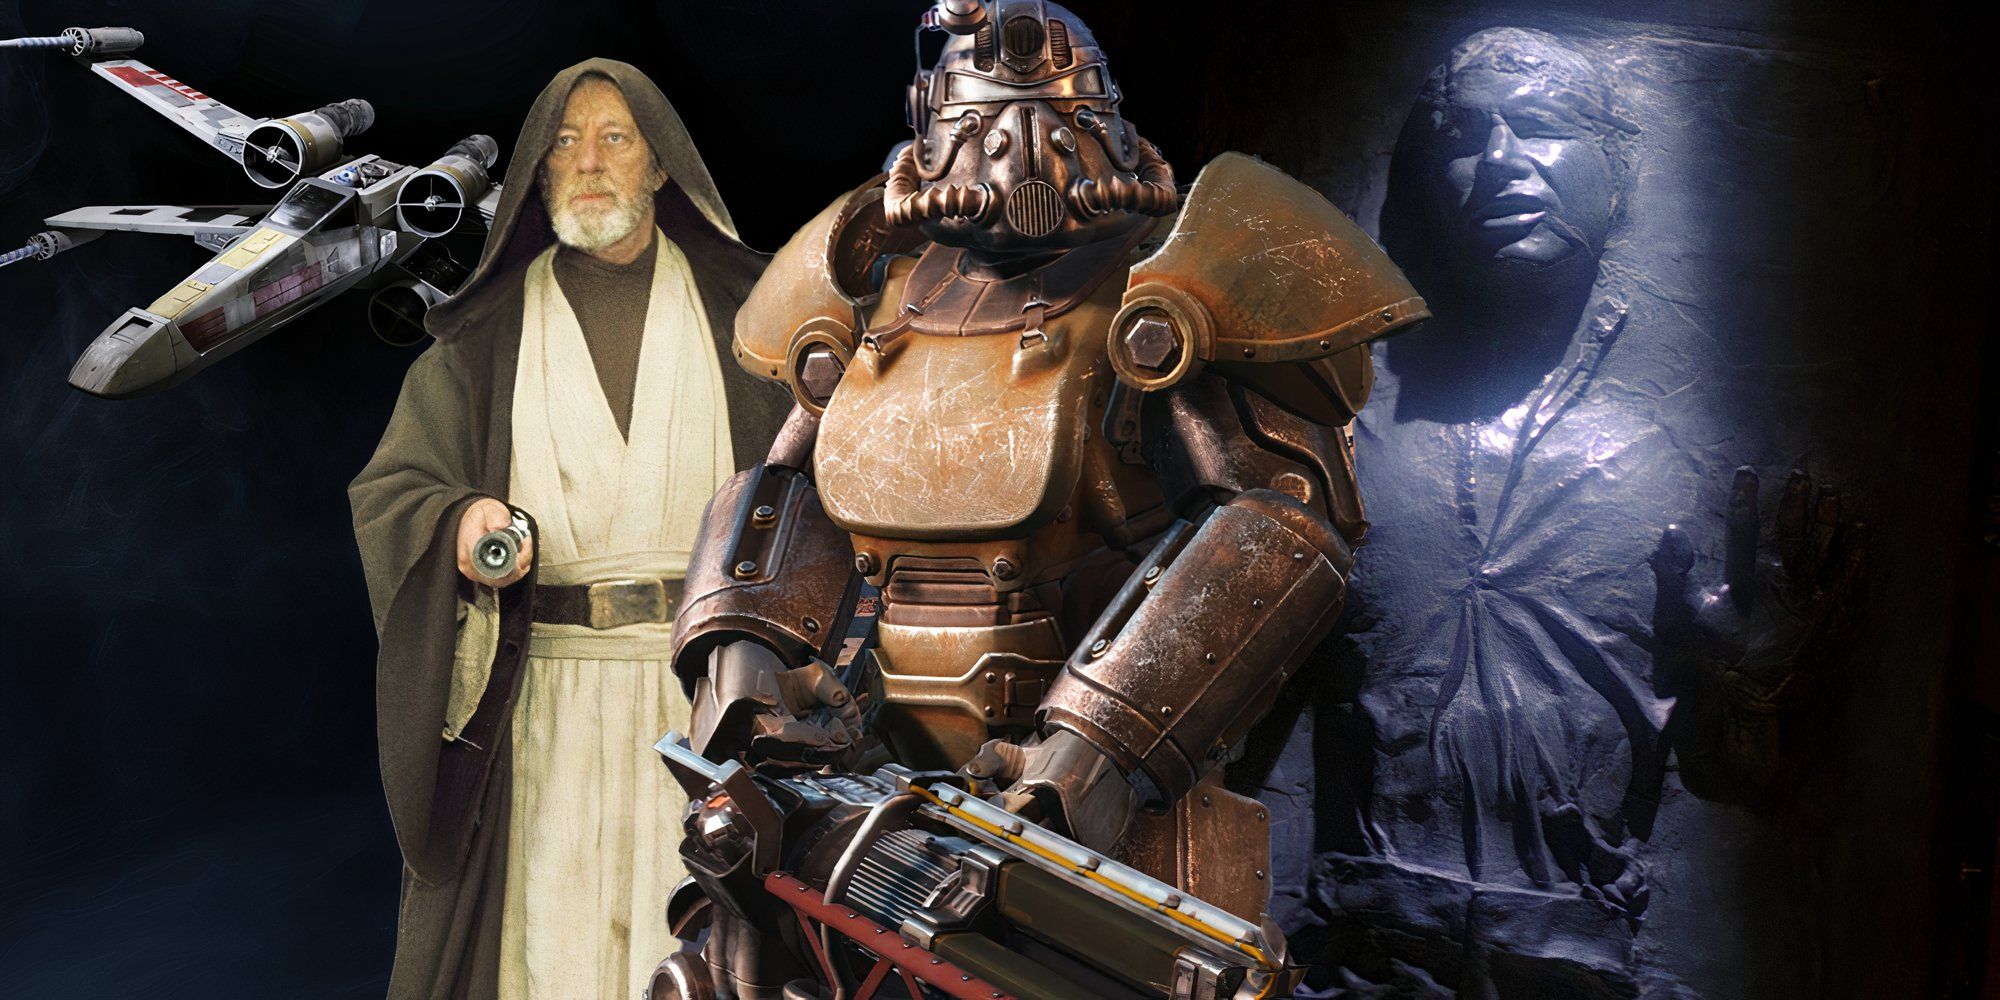 Membro da Brotherhood of Steel de Fallout 4 em armadura de poder ao lado da nave X-wing de Star Wars, Obi-Wan Kenobi, e Han Solo presos em Carbonite